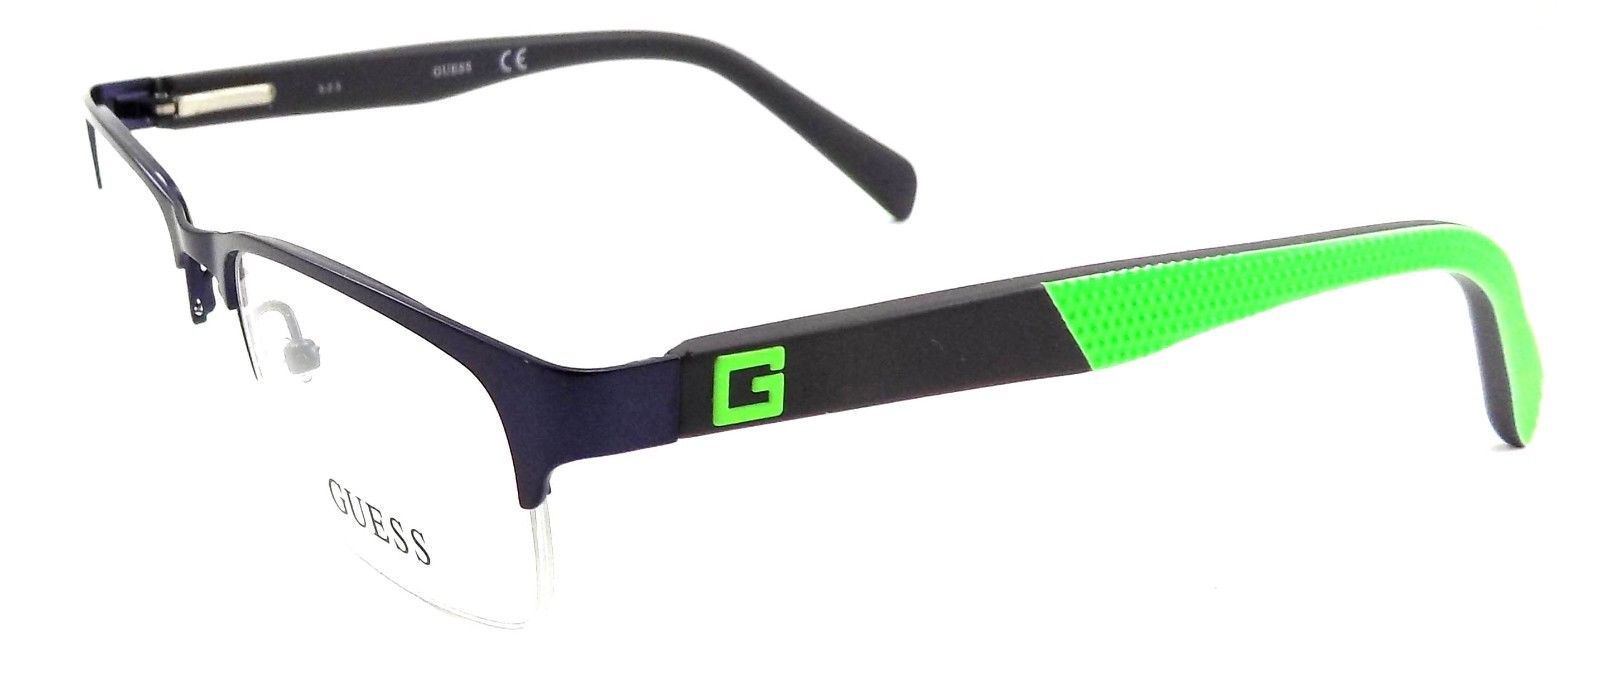 1-GUESS GU9148 091 Eyeglasses Frames Half Rim 48-16-130 Satin Black + CASE-664689700462-IKSpecs